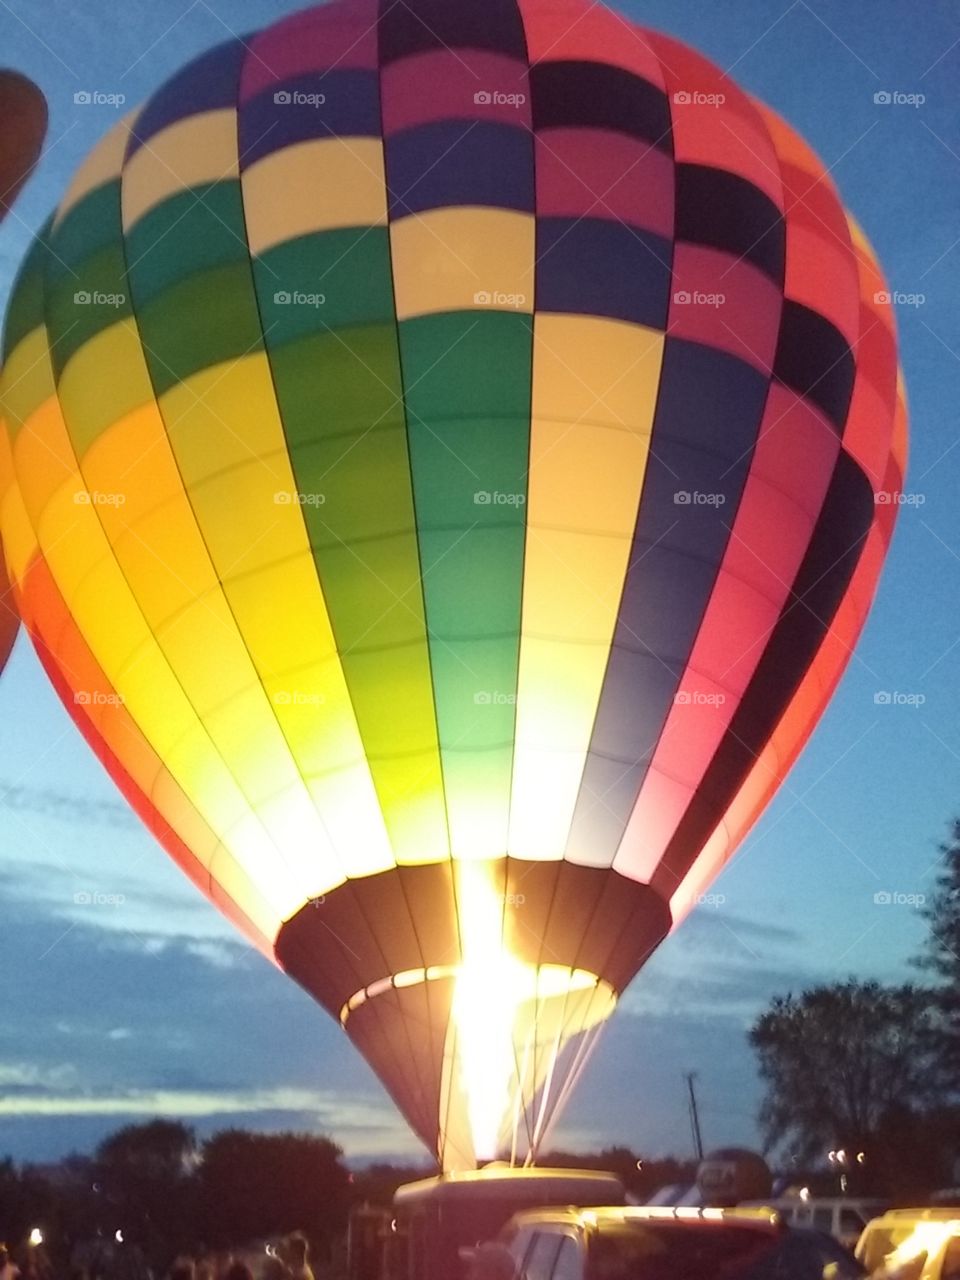 Rainbow Hot Air Balloon